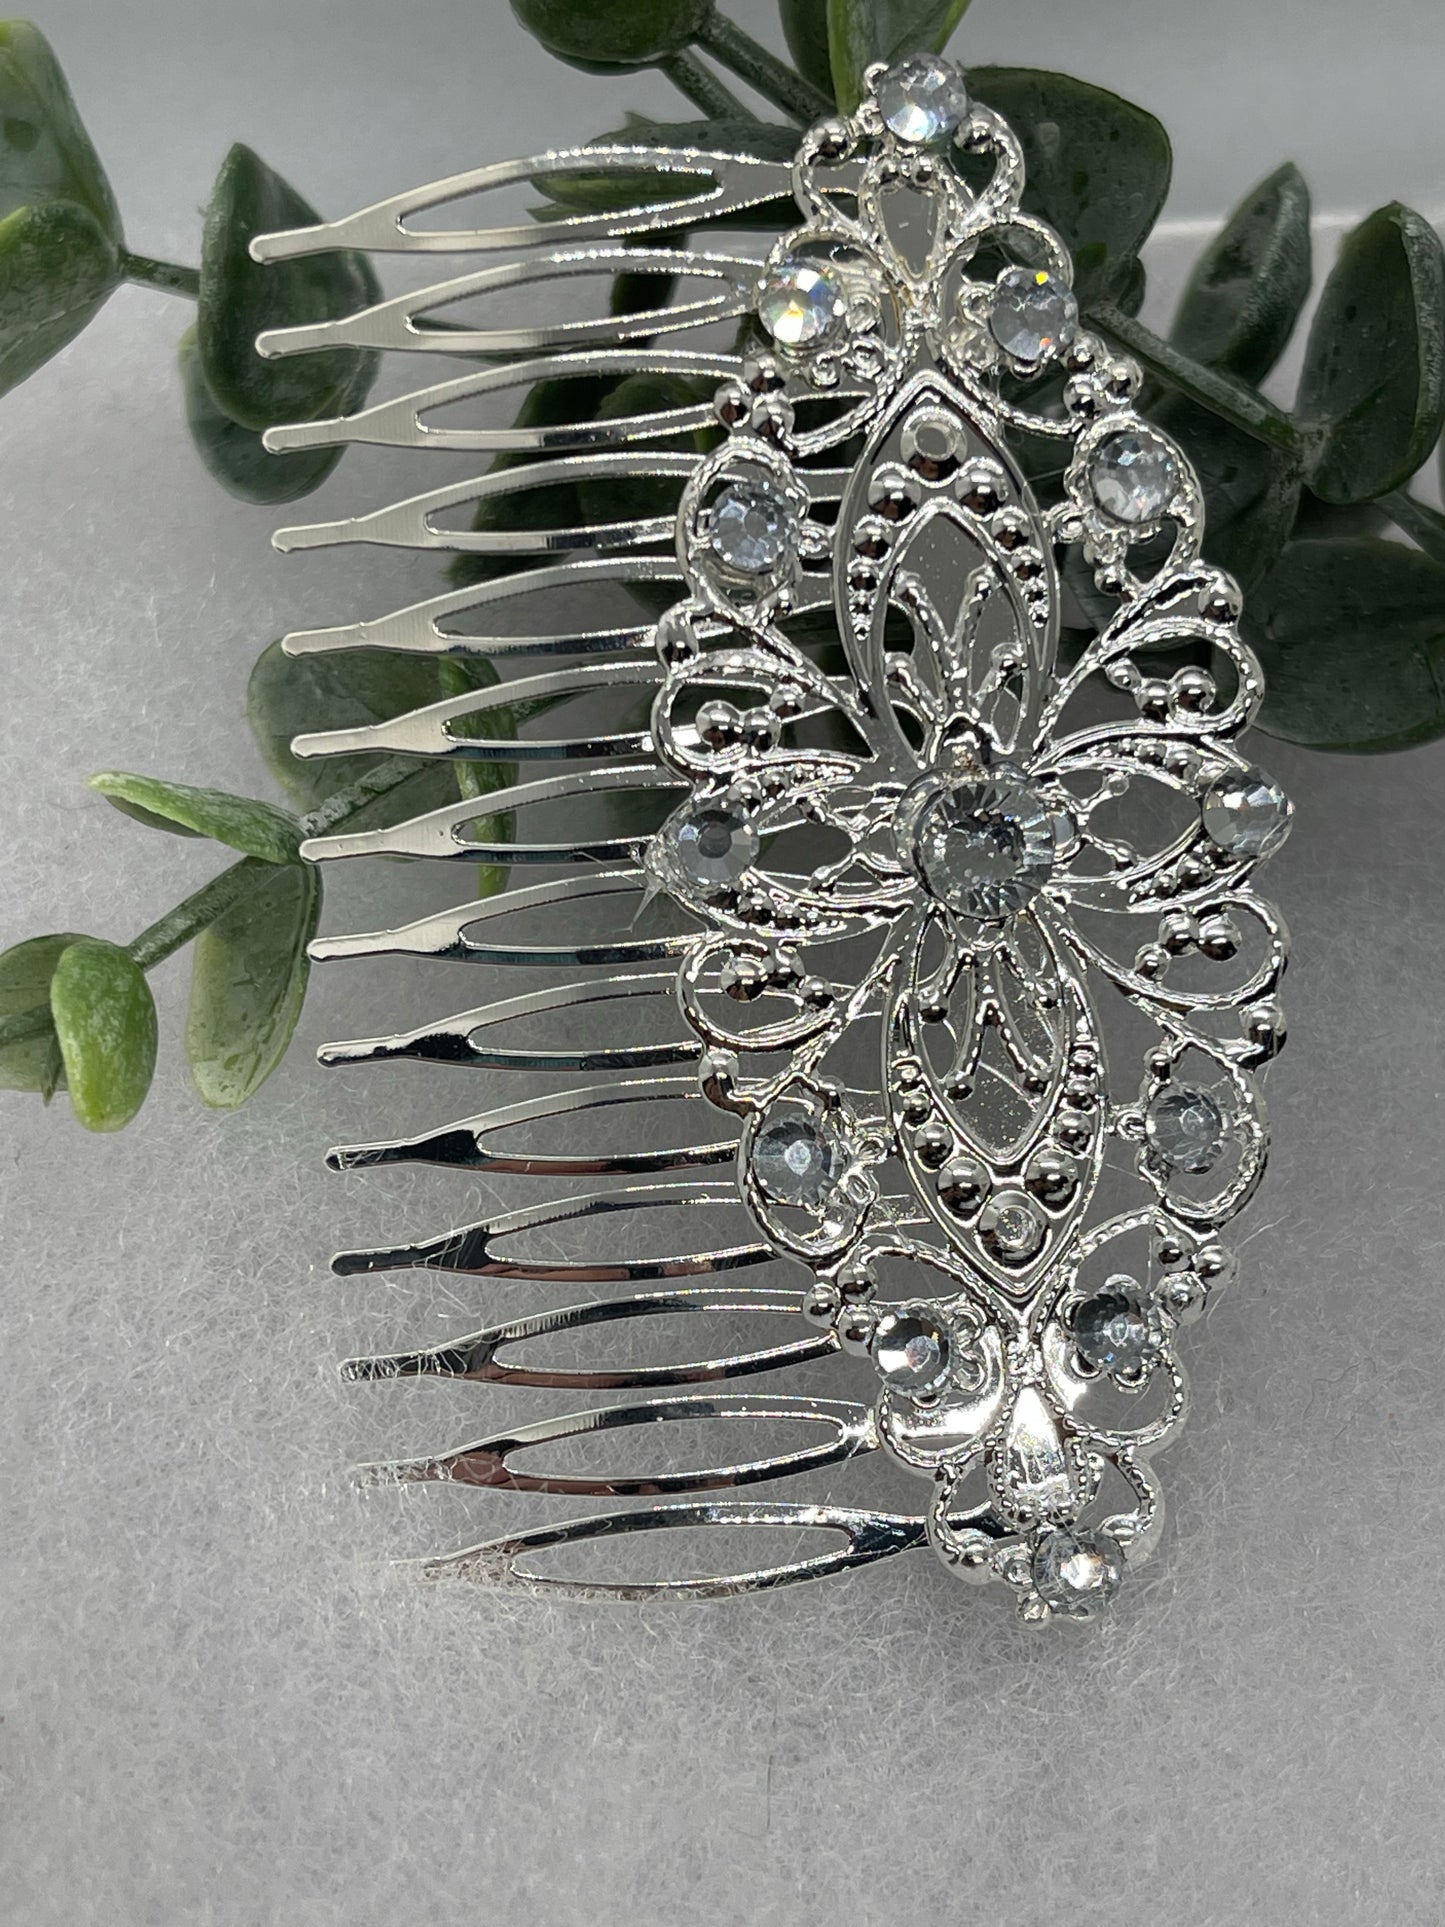 Clear crystal rhinestone 3.5” Silver side comb Antique vintage style bridal Wedding shower sweet 16 birthday princess bridesmaid hair accessory